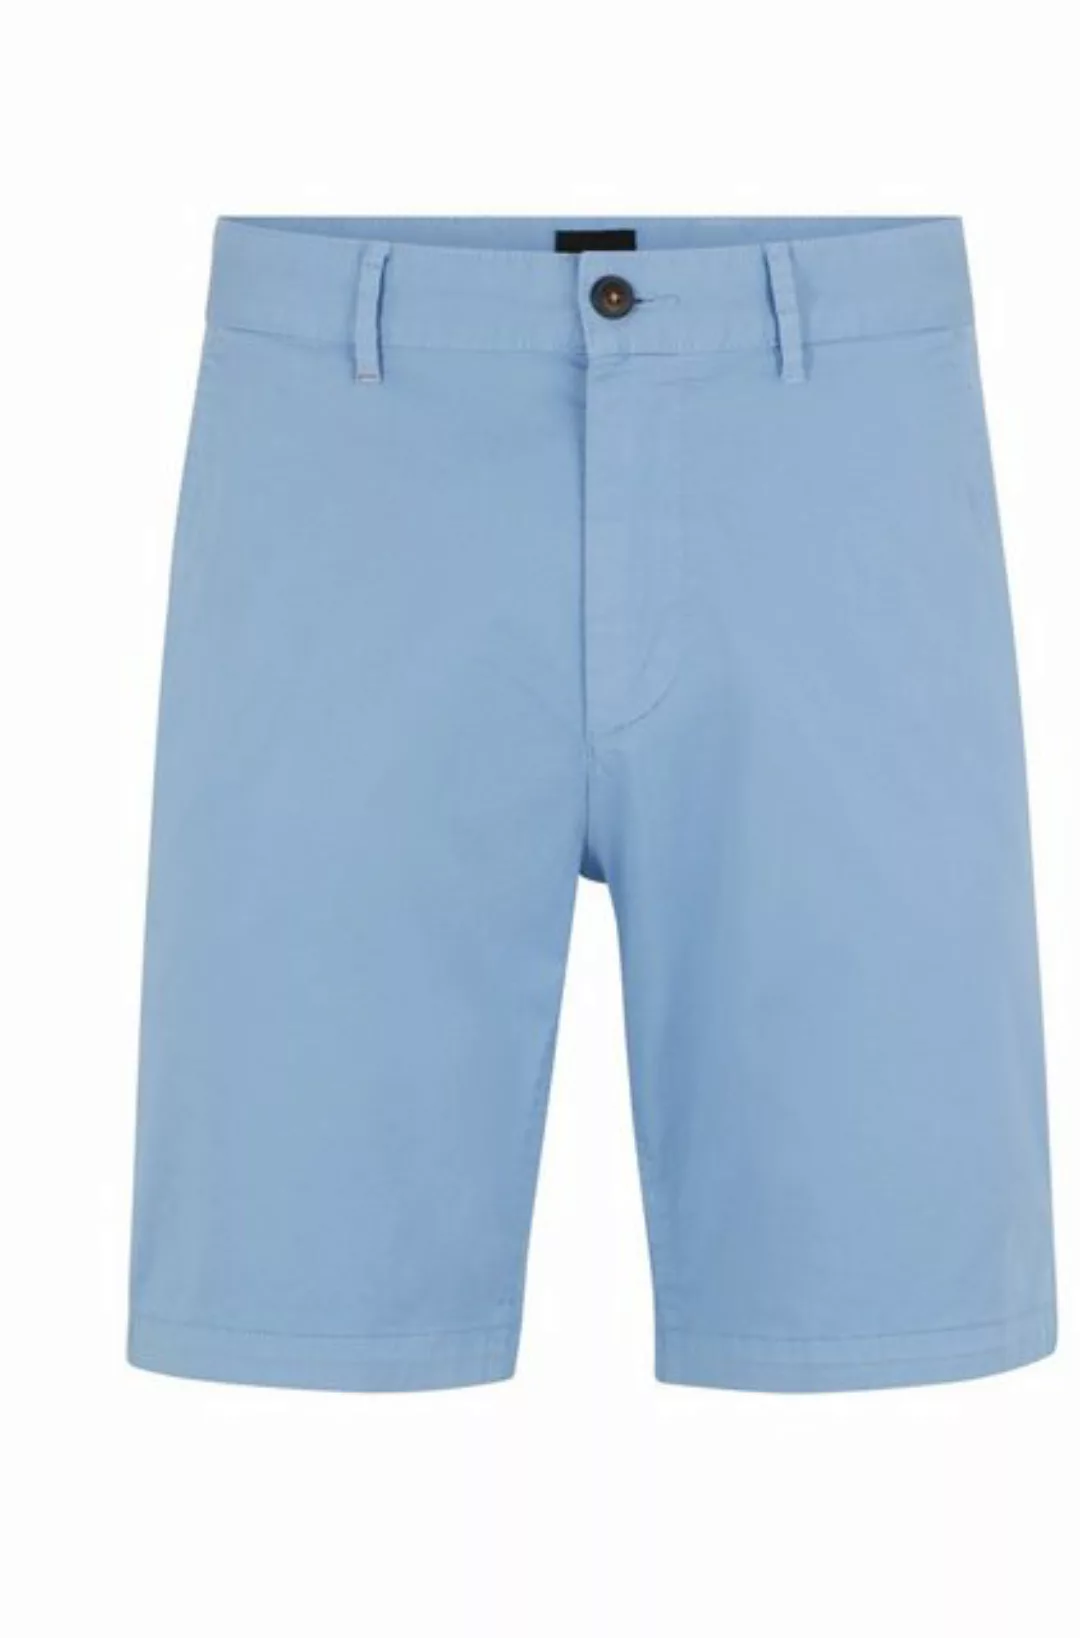 BOSS ORANGE Stoffhose Chino-slim-Shorts 10248647 01, Light/Pastel Blue günstig online kaufen